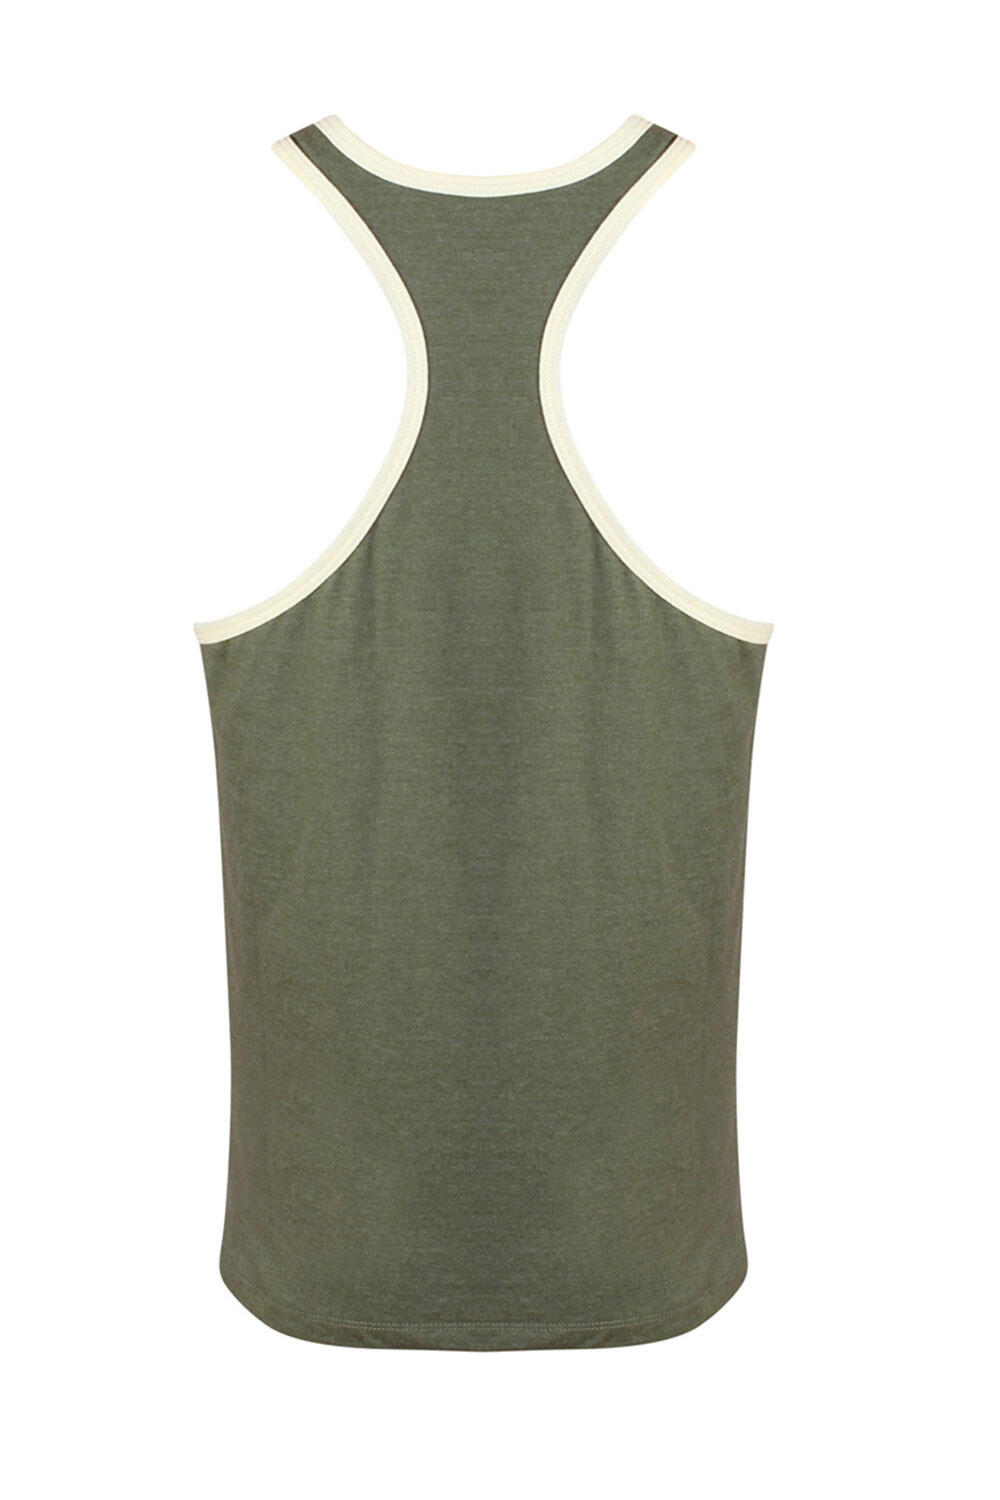 Men's Gold's Gym Contrast Muscle Joe Print Stringer Vest 4/5